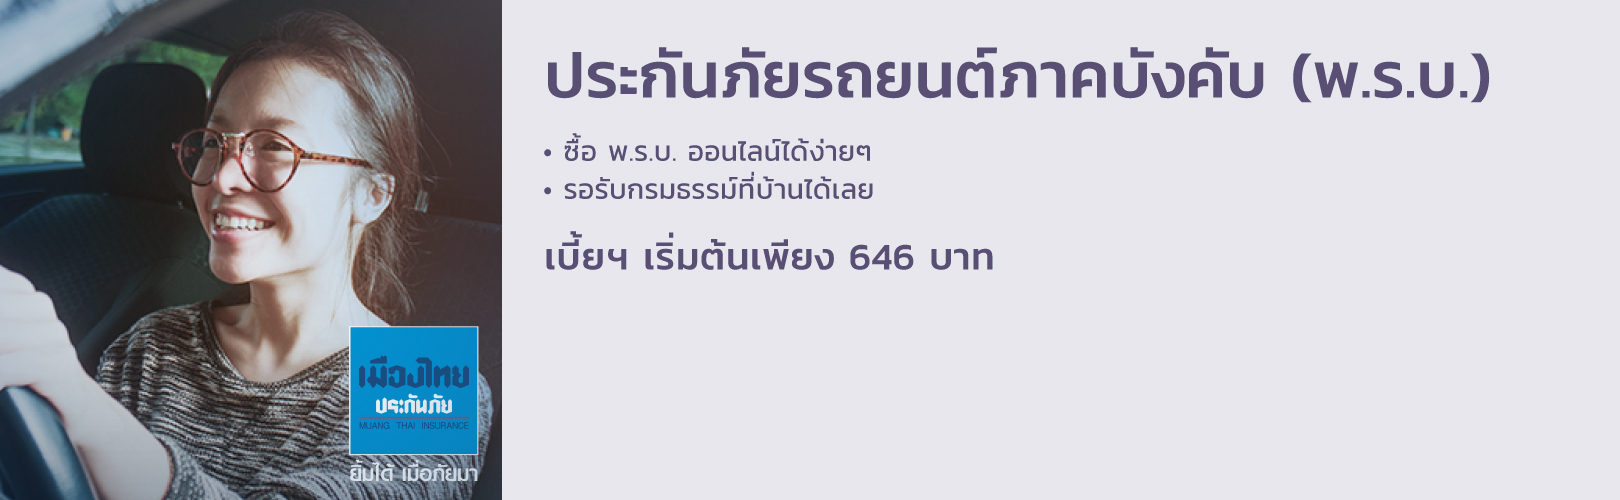 Muang_Thai_Insurance_พรบ_1620x500